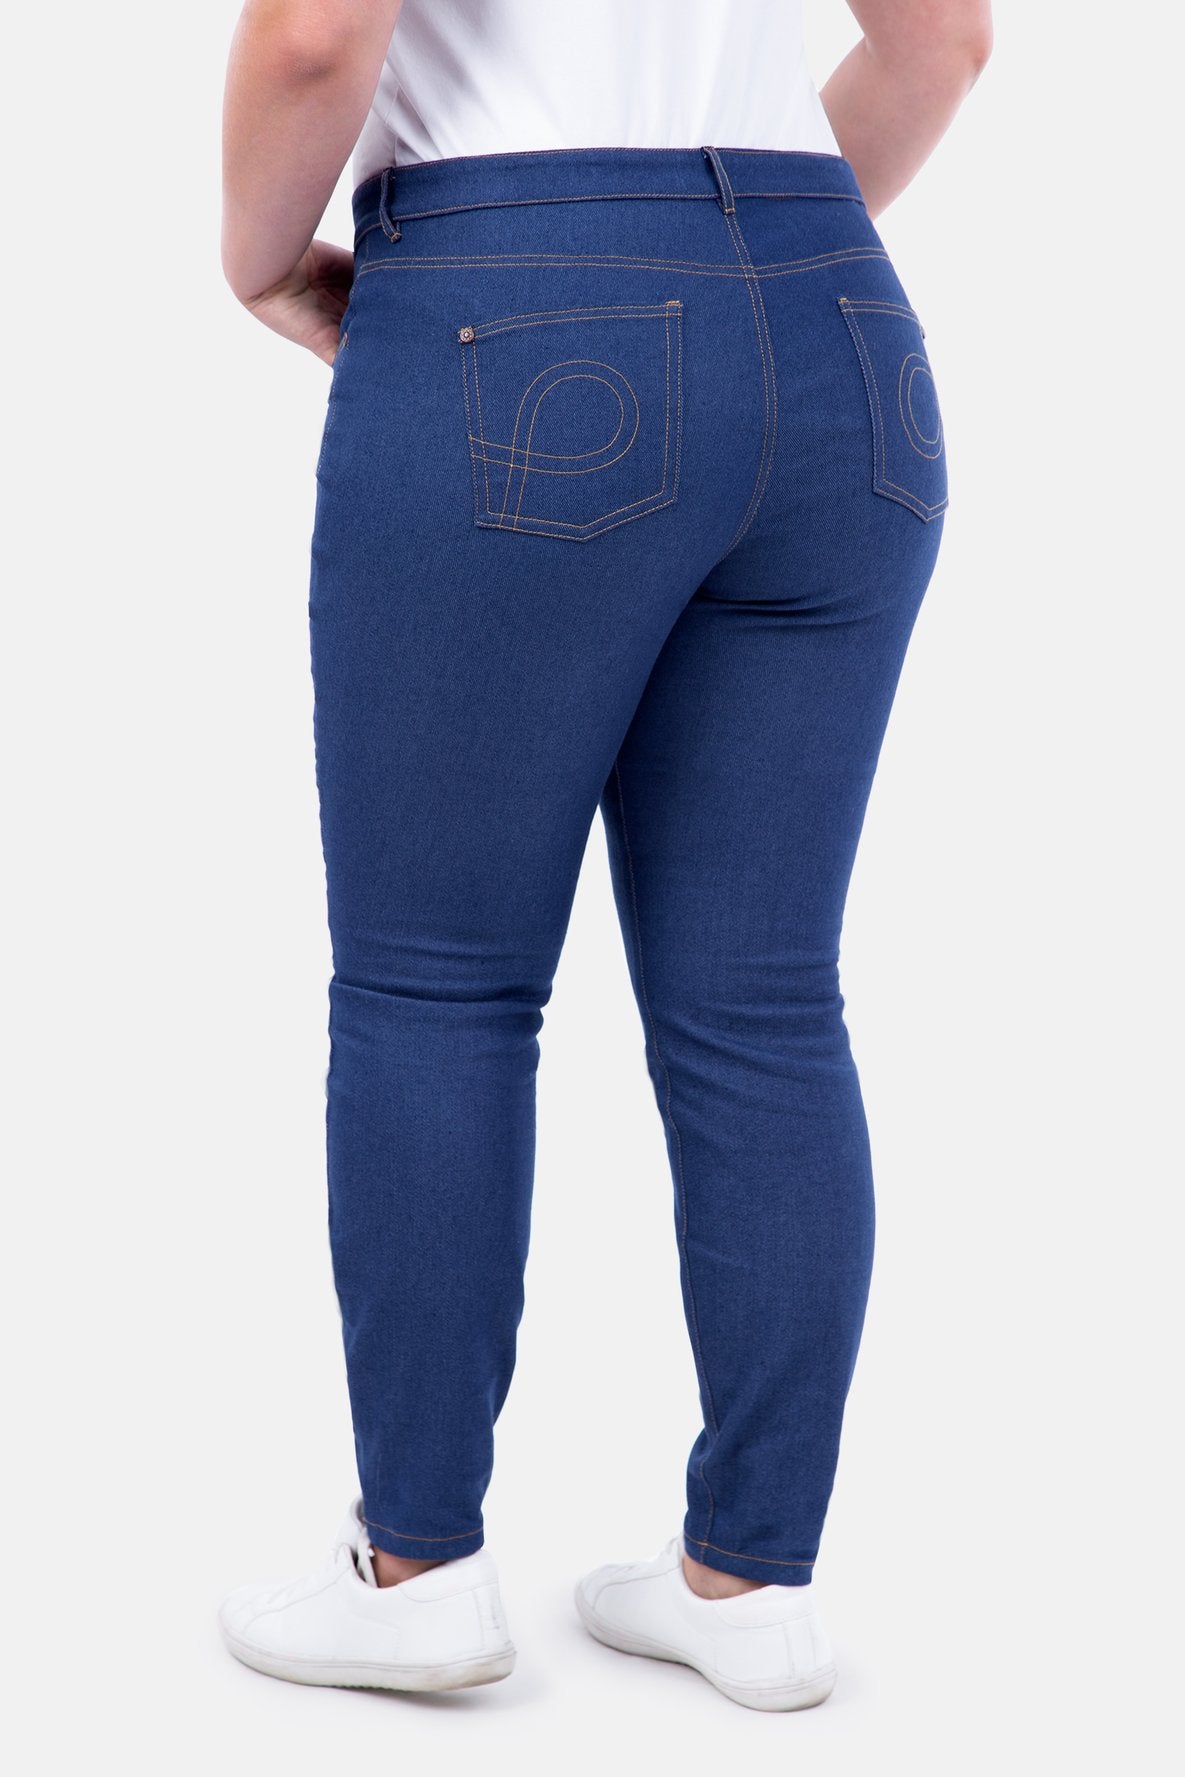 Pattydoo Jeans #3 & Jeans #4